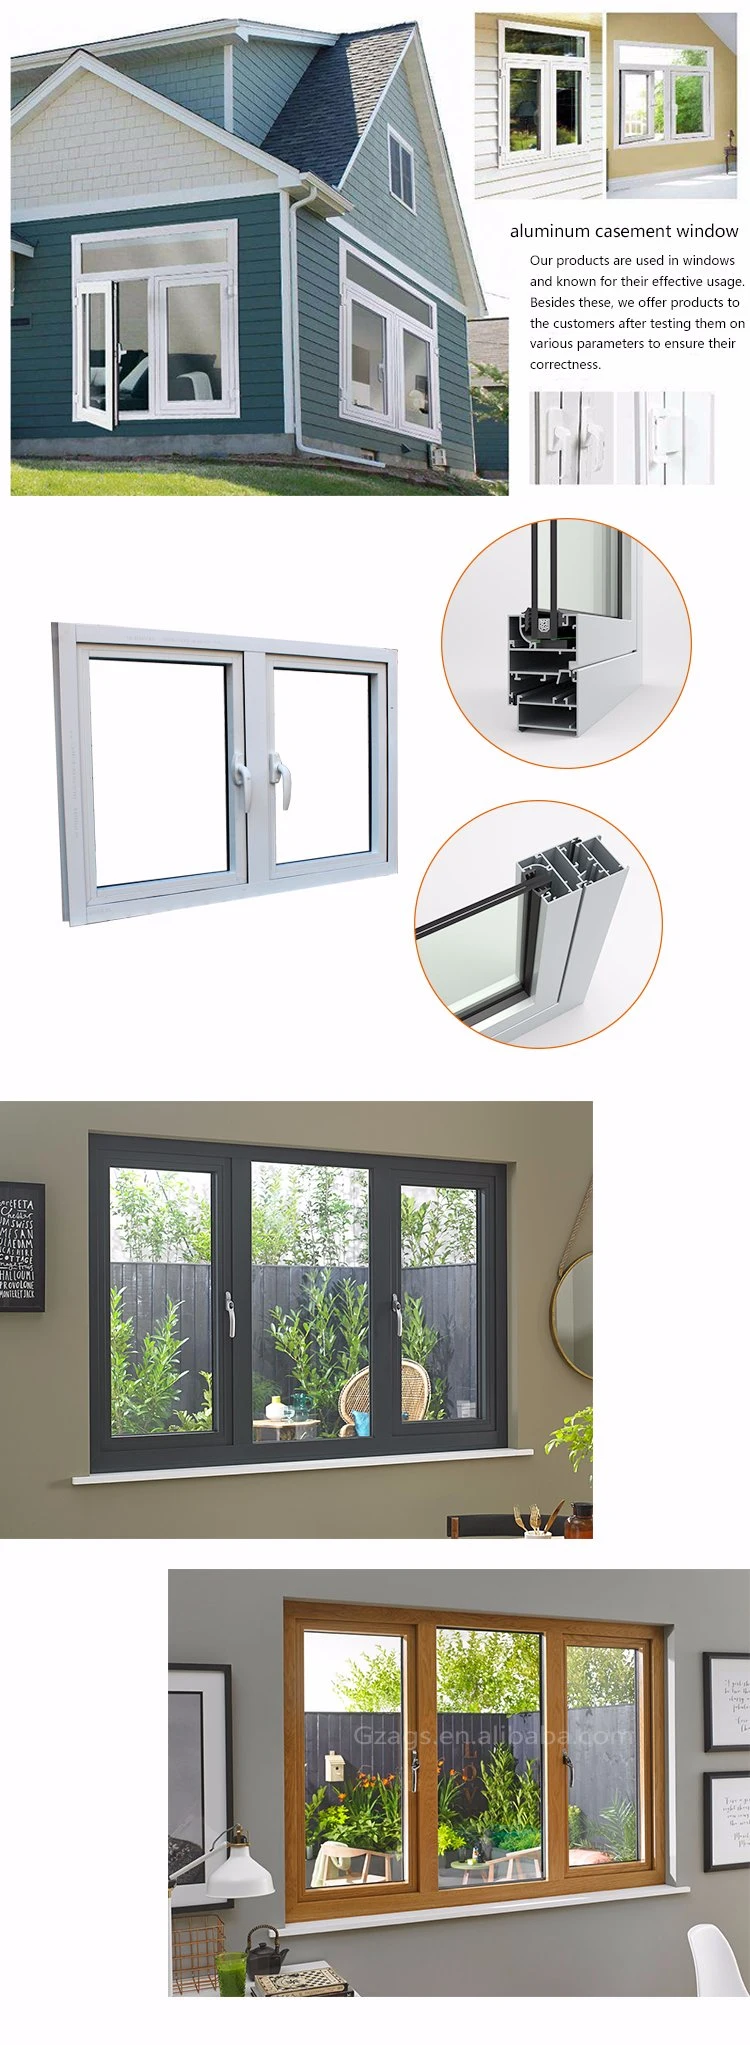 New Type Aluminium Windows and Doors|Replacing Casement Windows with Double Hung